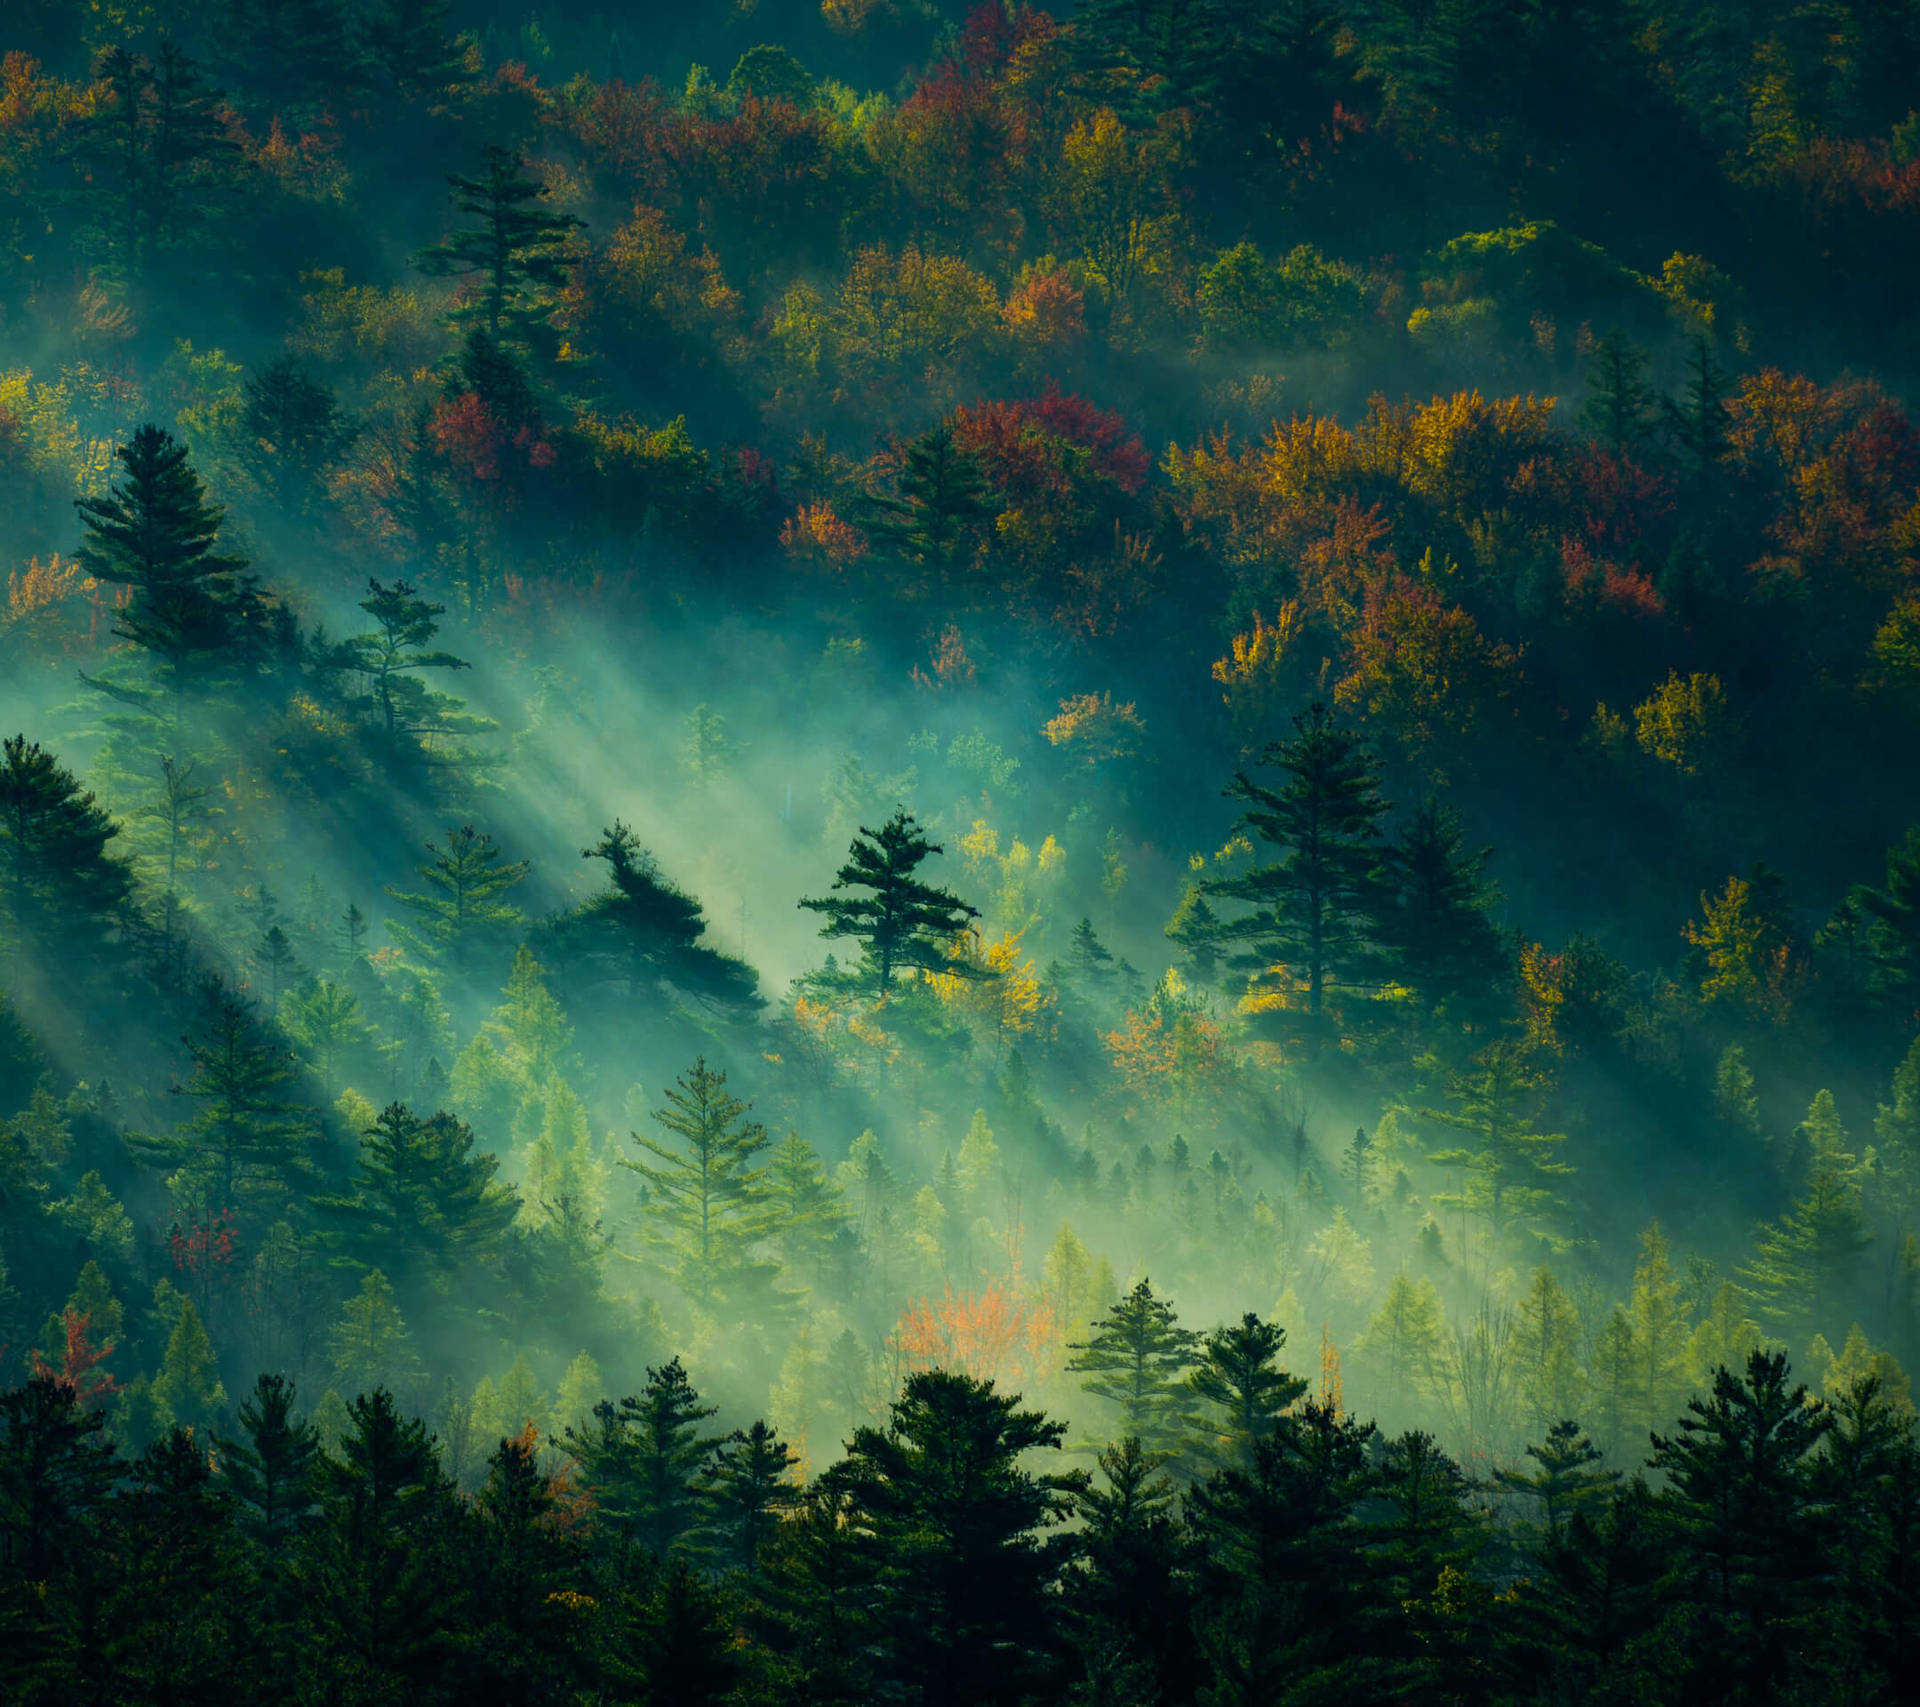 Misty Green Forest Image Wallpaper